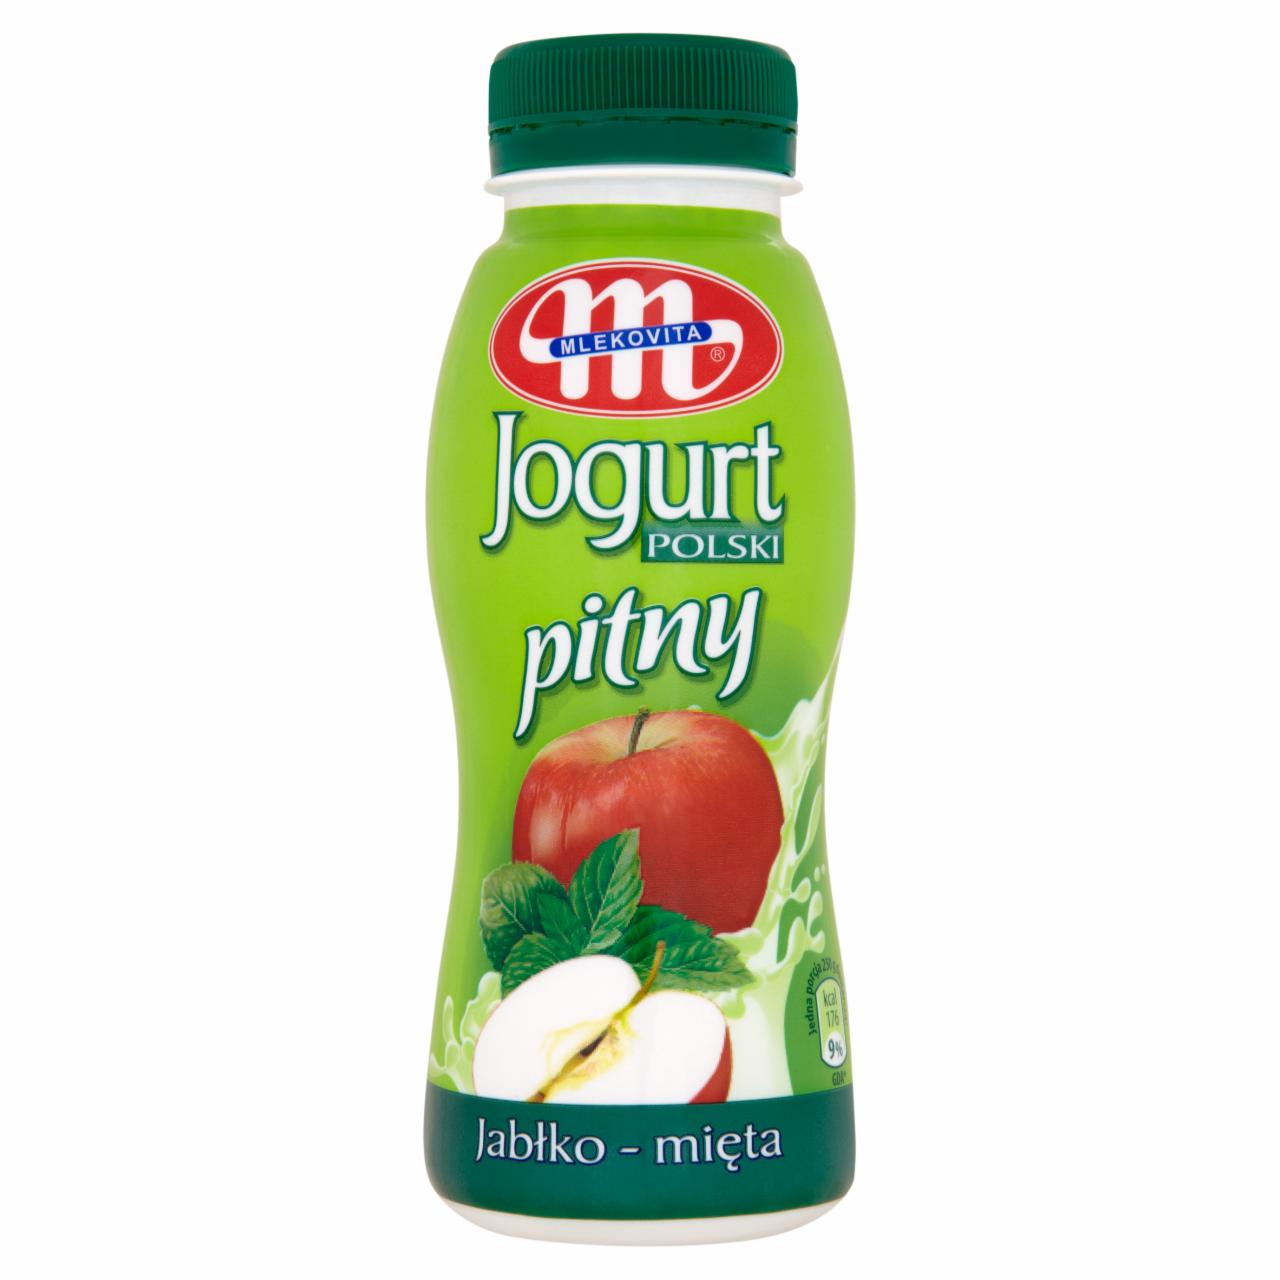 Zdjęcia - Mlekovita Jogurt Polski pitny jabłko-mięta 250 g